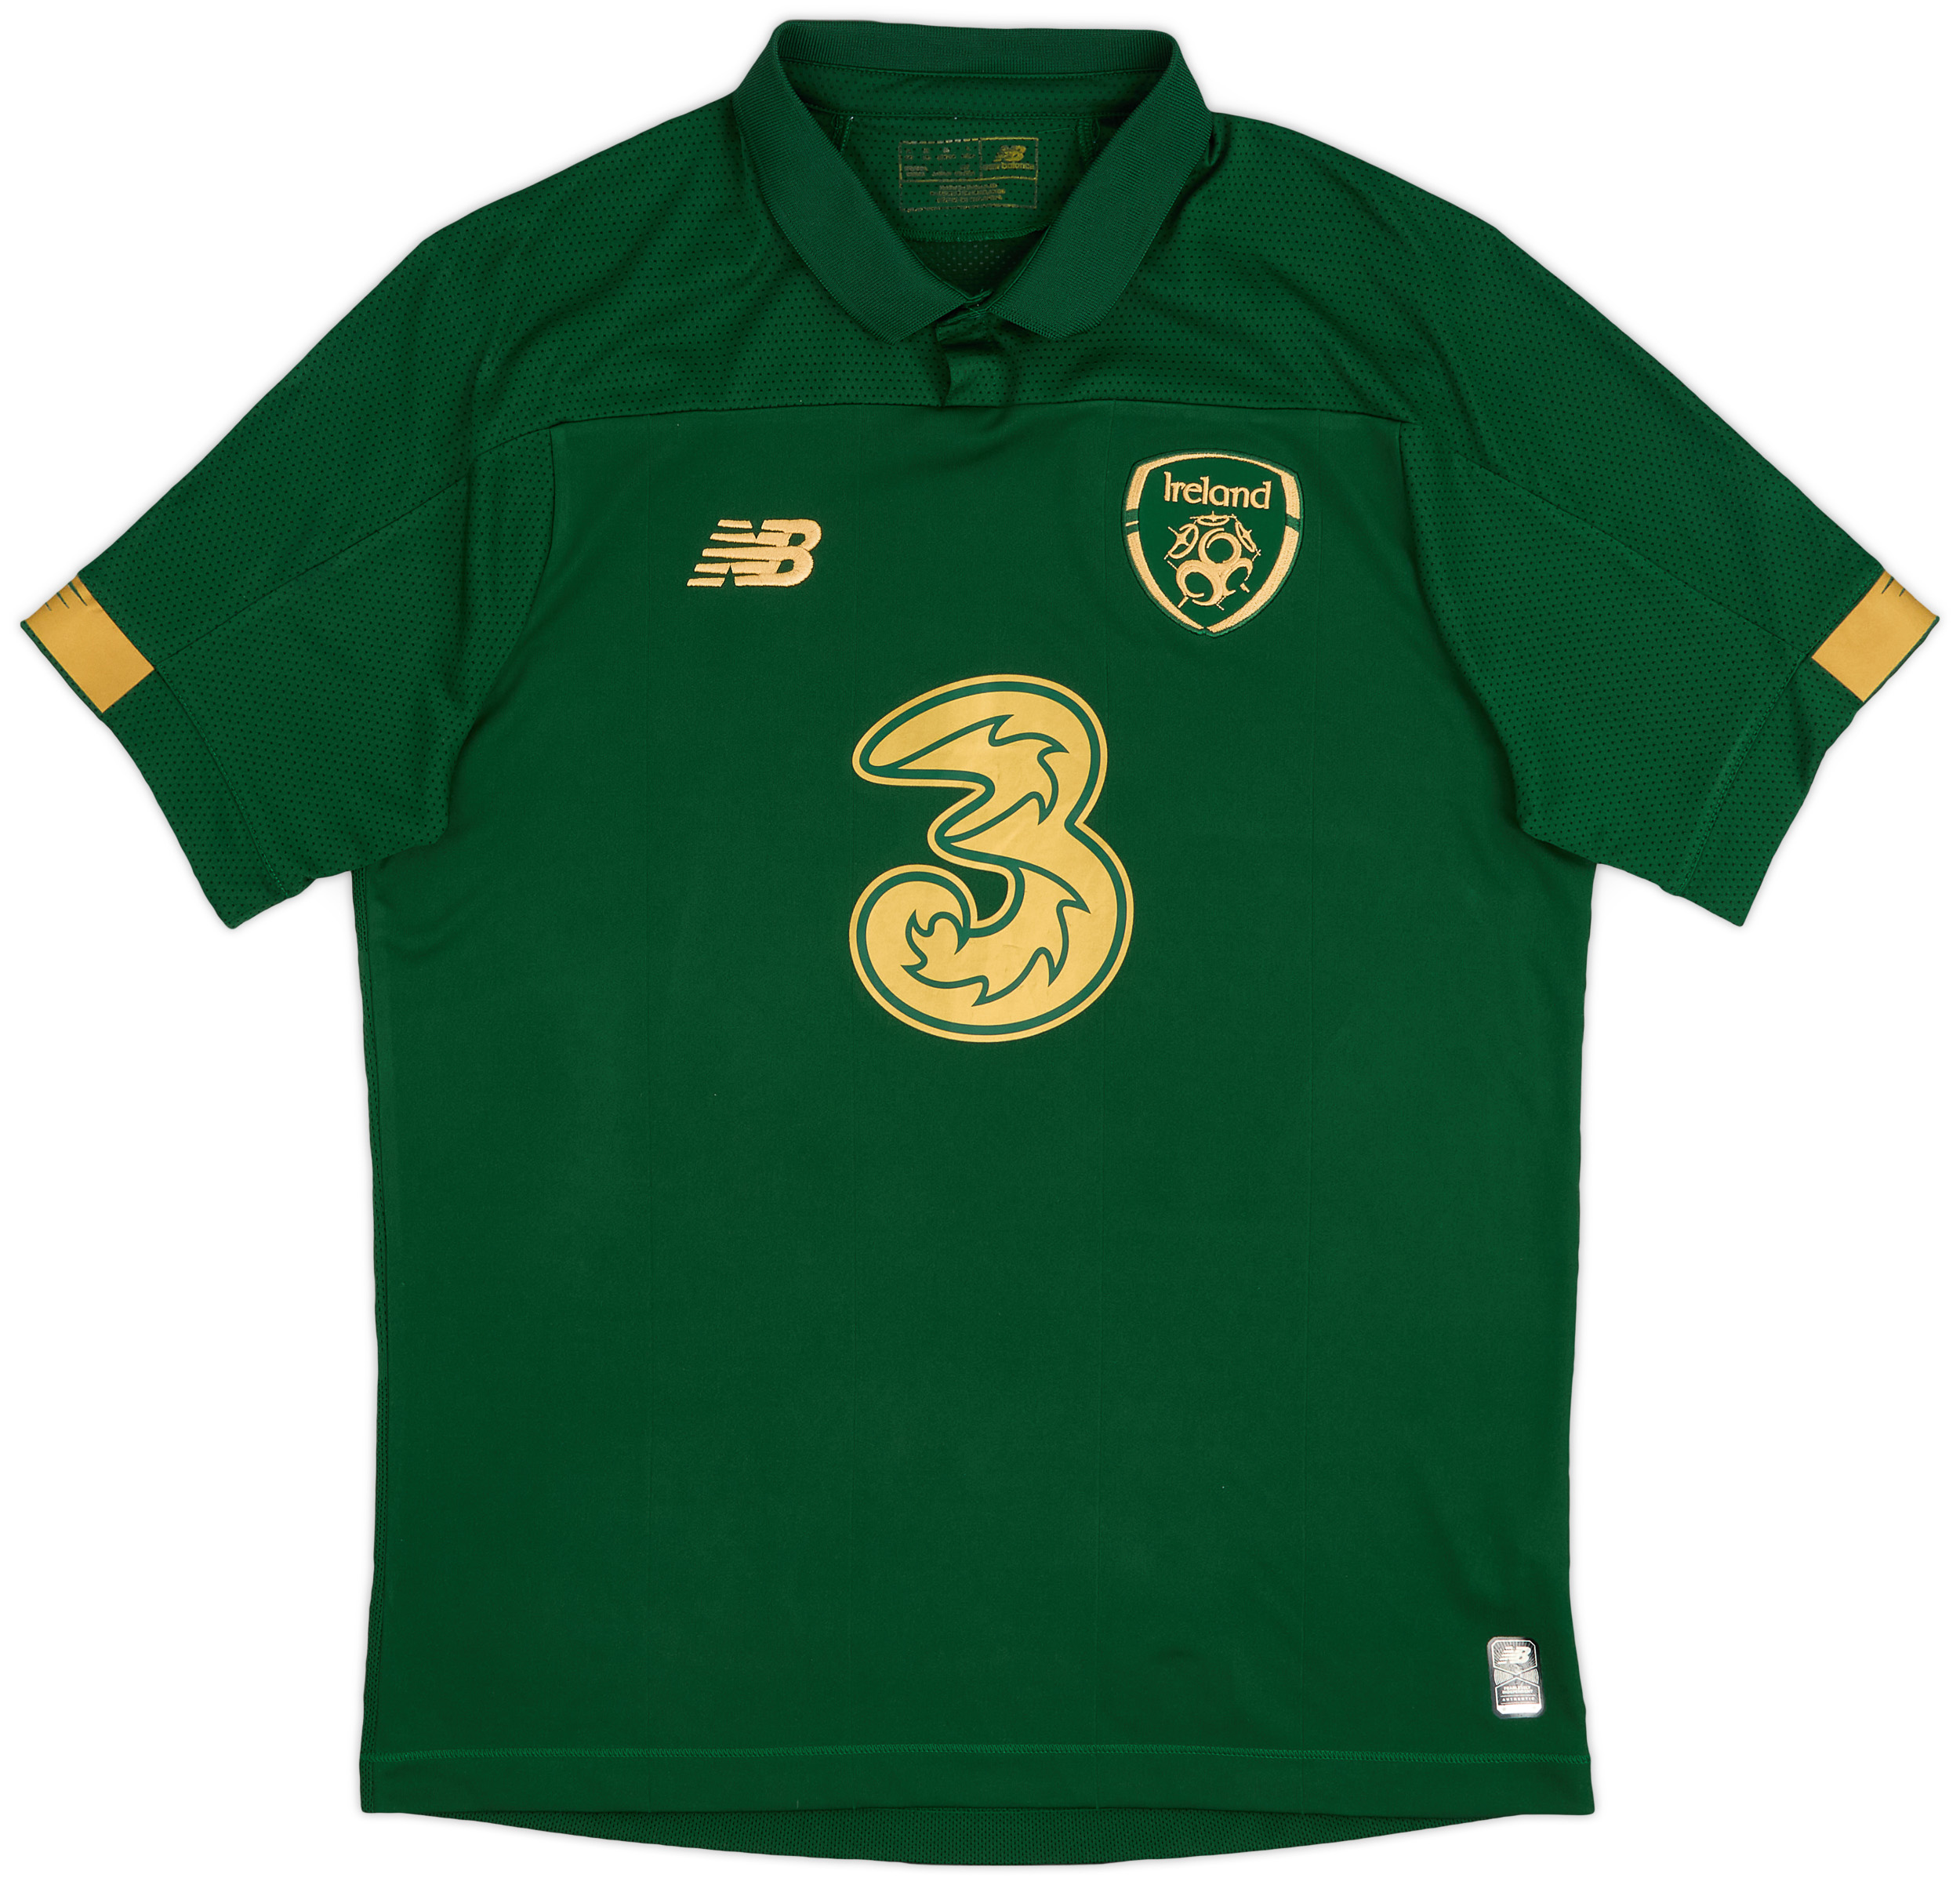 2019-20 Republic of Ireland Home Shirt - 8/10 - ()